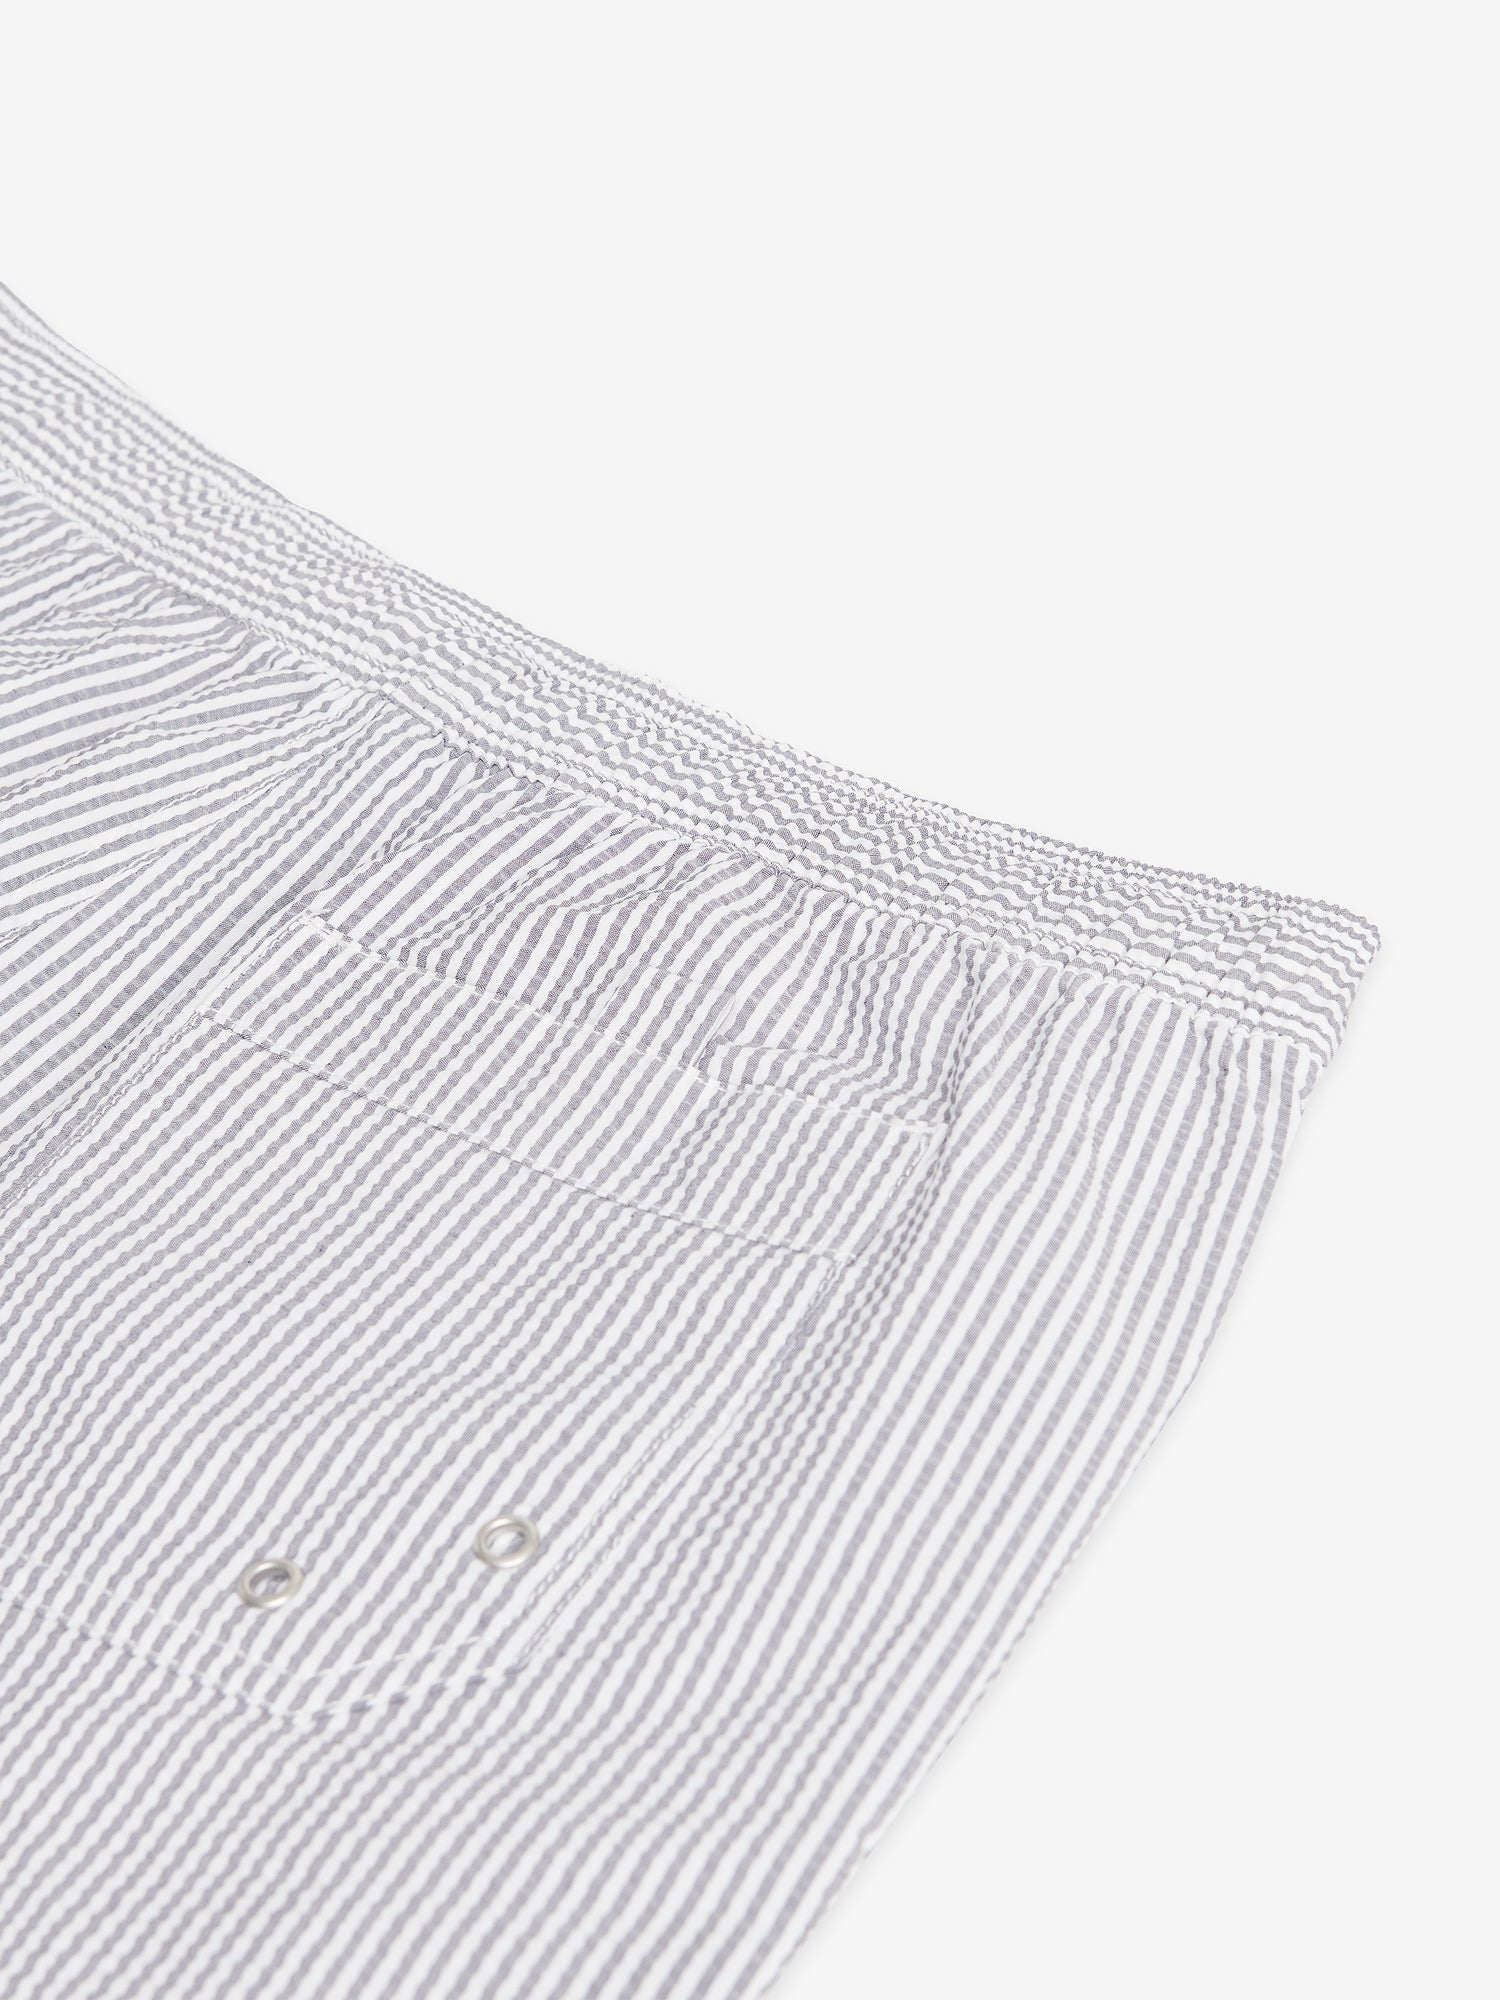 Venice Seersucker Cotton-Polyester SW00024-NVY